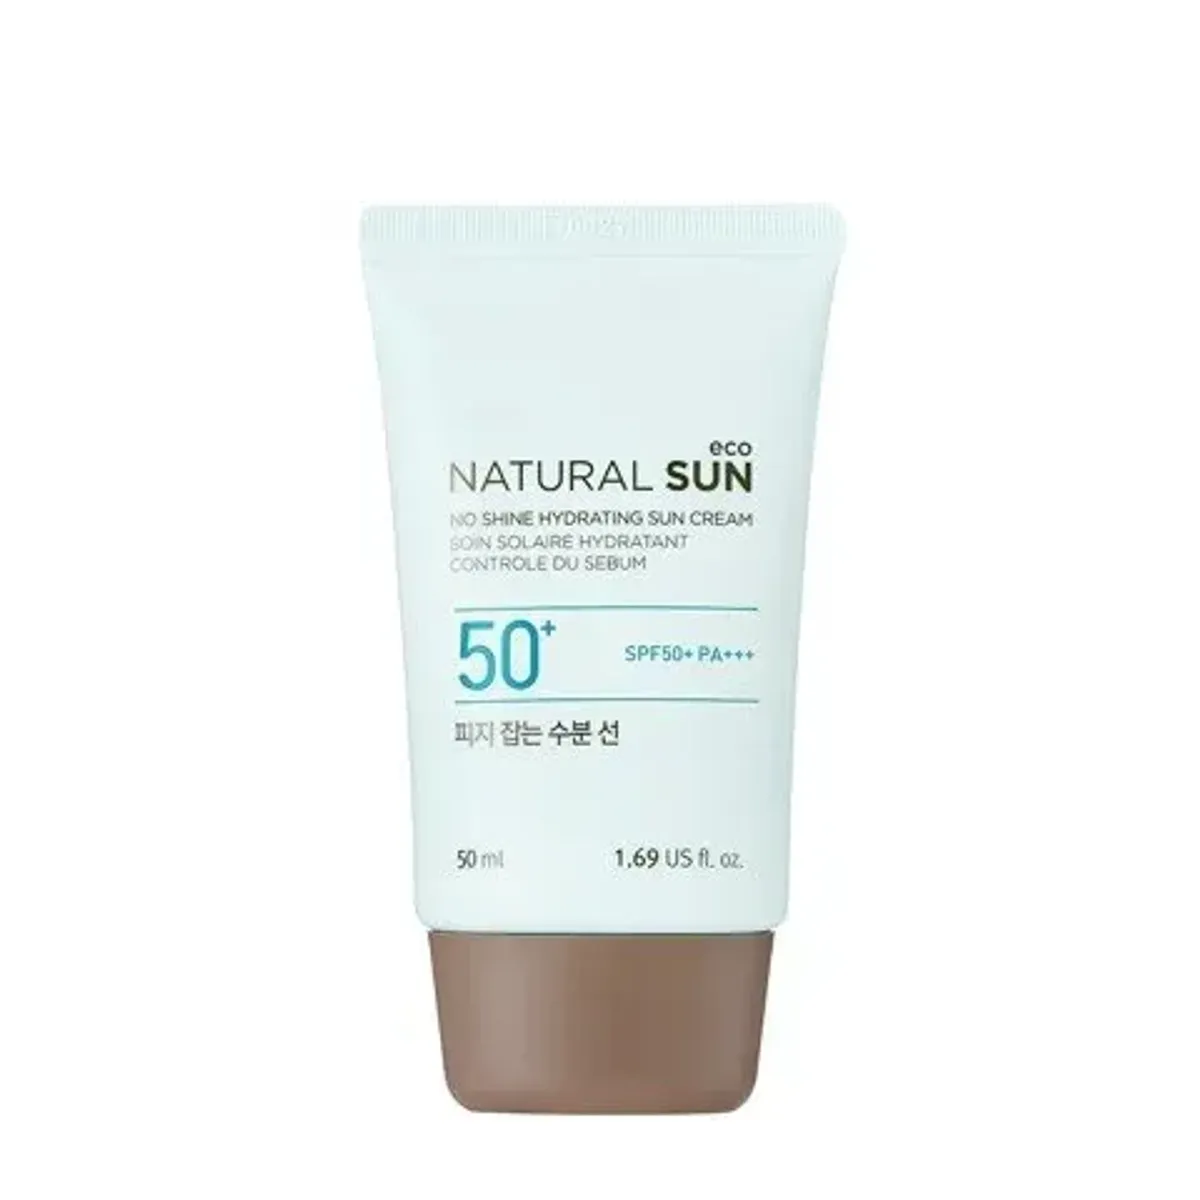 kem-chong-nang-kiem-soat-nhon-natural-sun-eco-no-shine-hydrating-sun-cream-spf50-pa-50ml-2